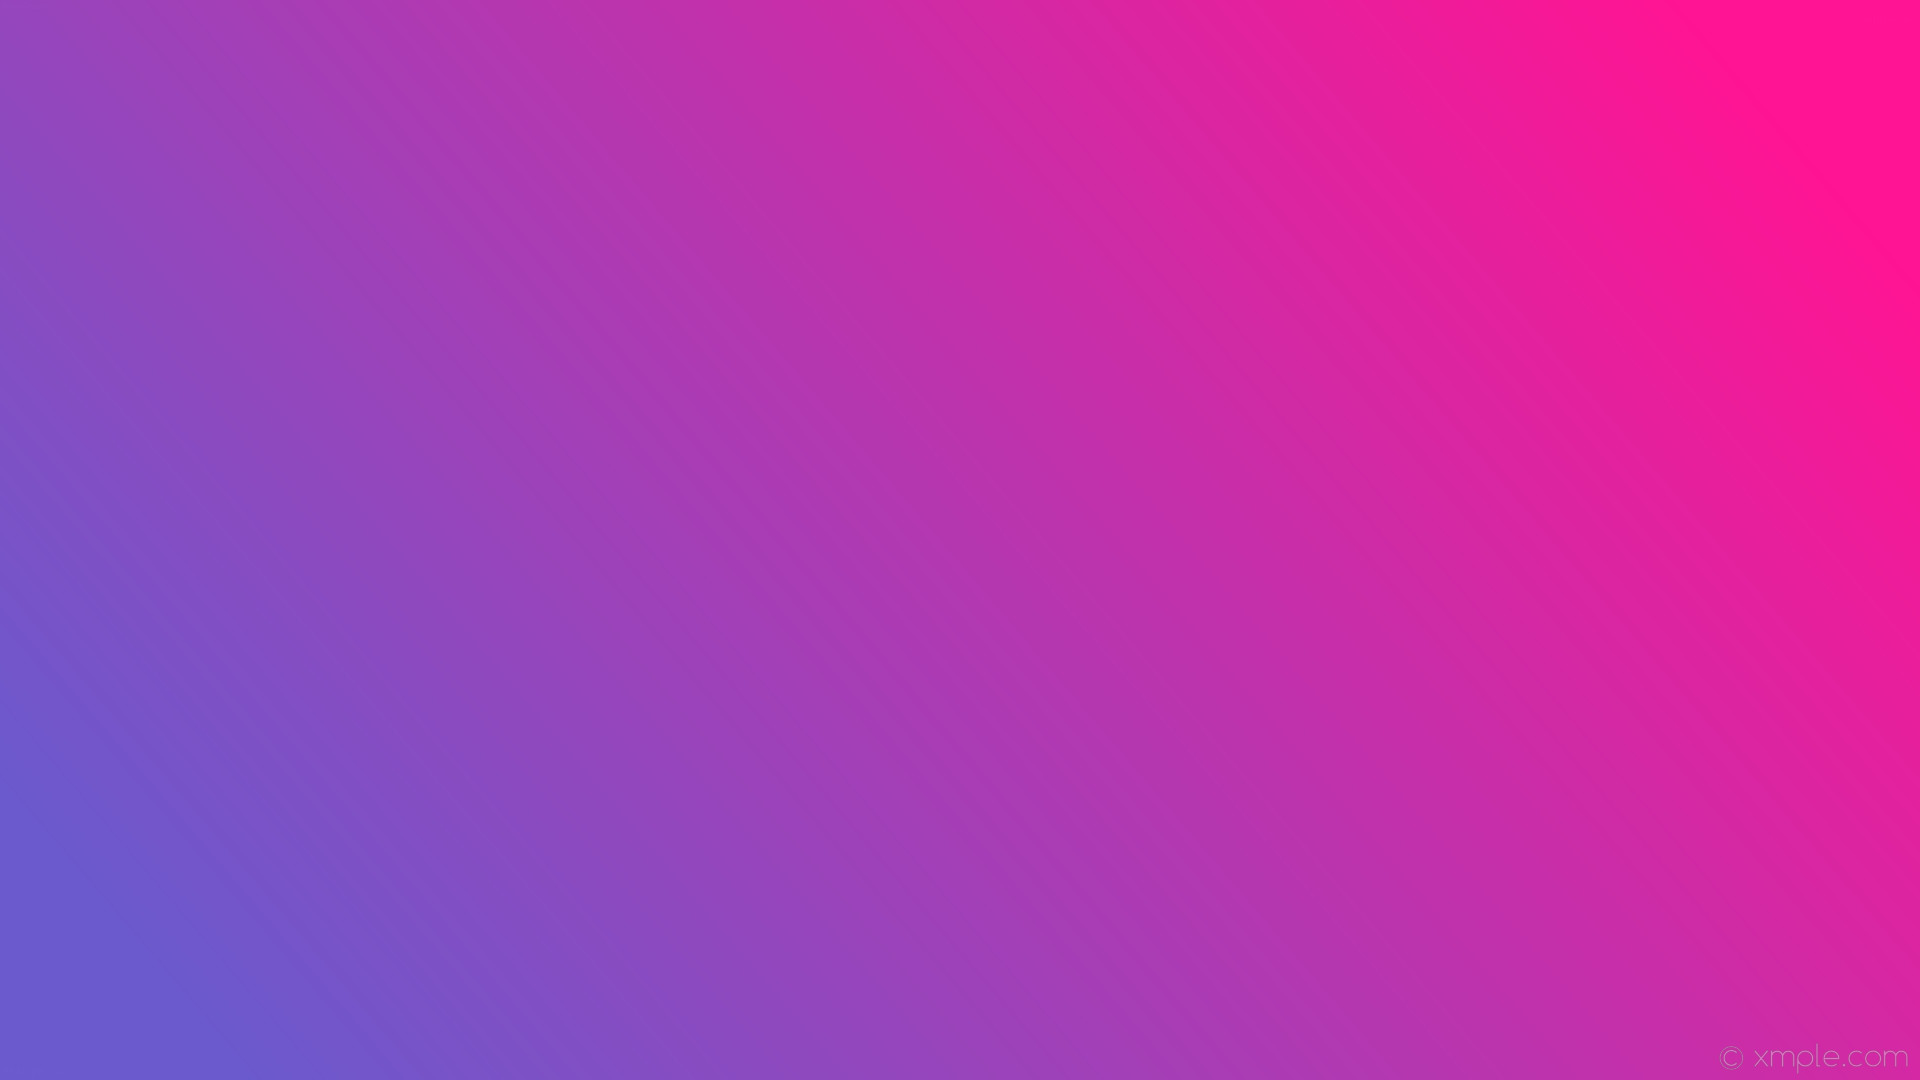 1920x1080 wallpaper gradient pink purple linear slate blue deep pink #6a5acd #ff1493  195Â°